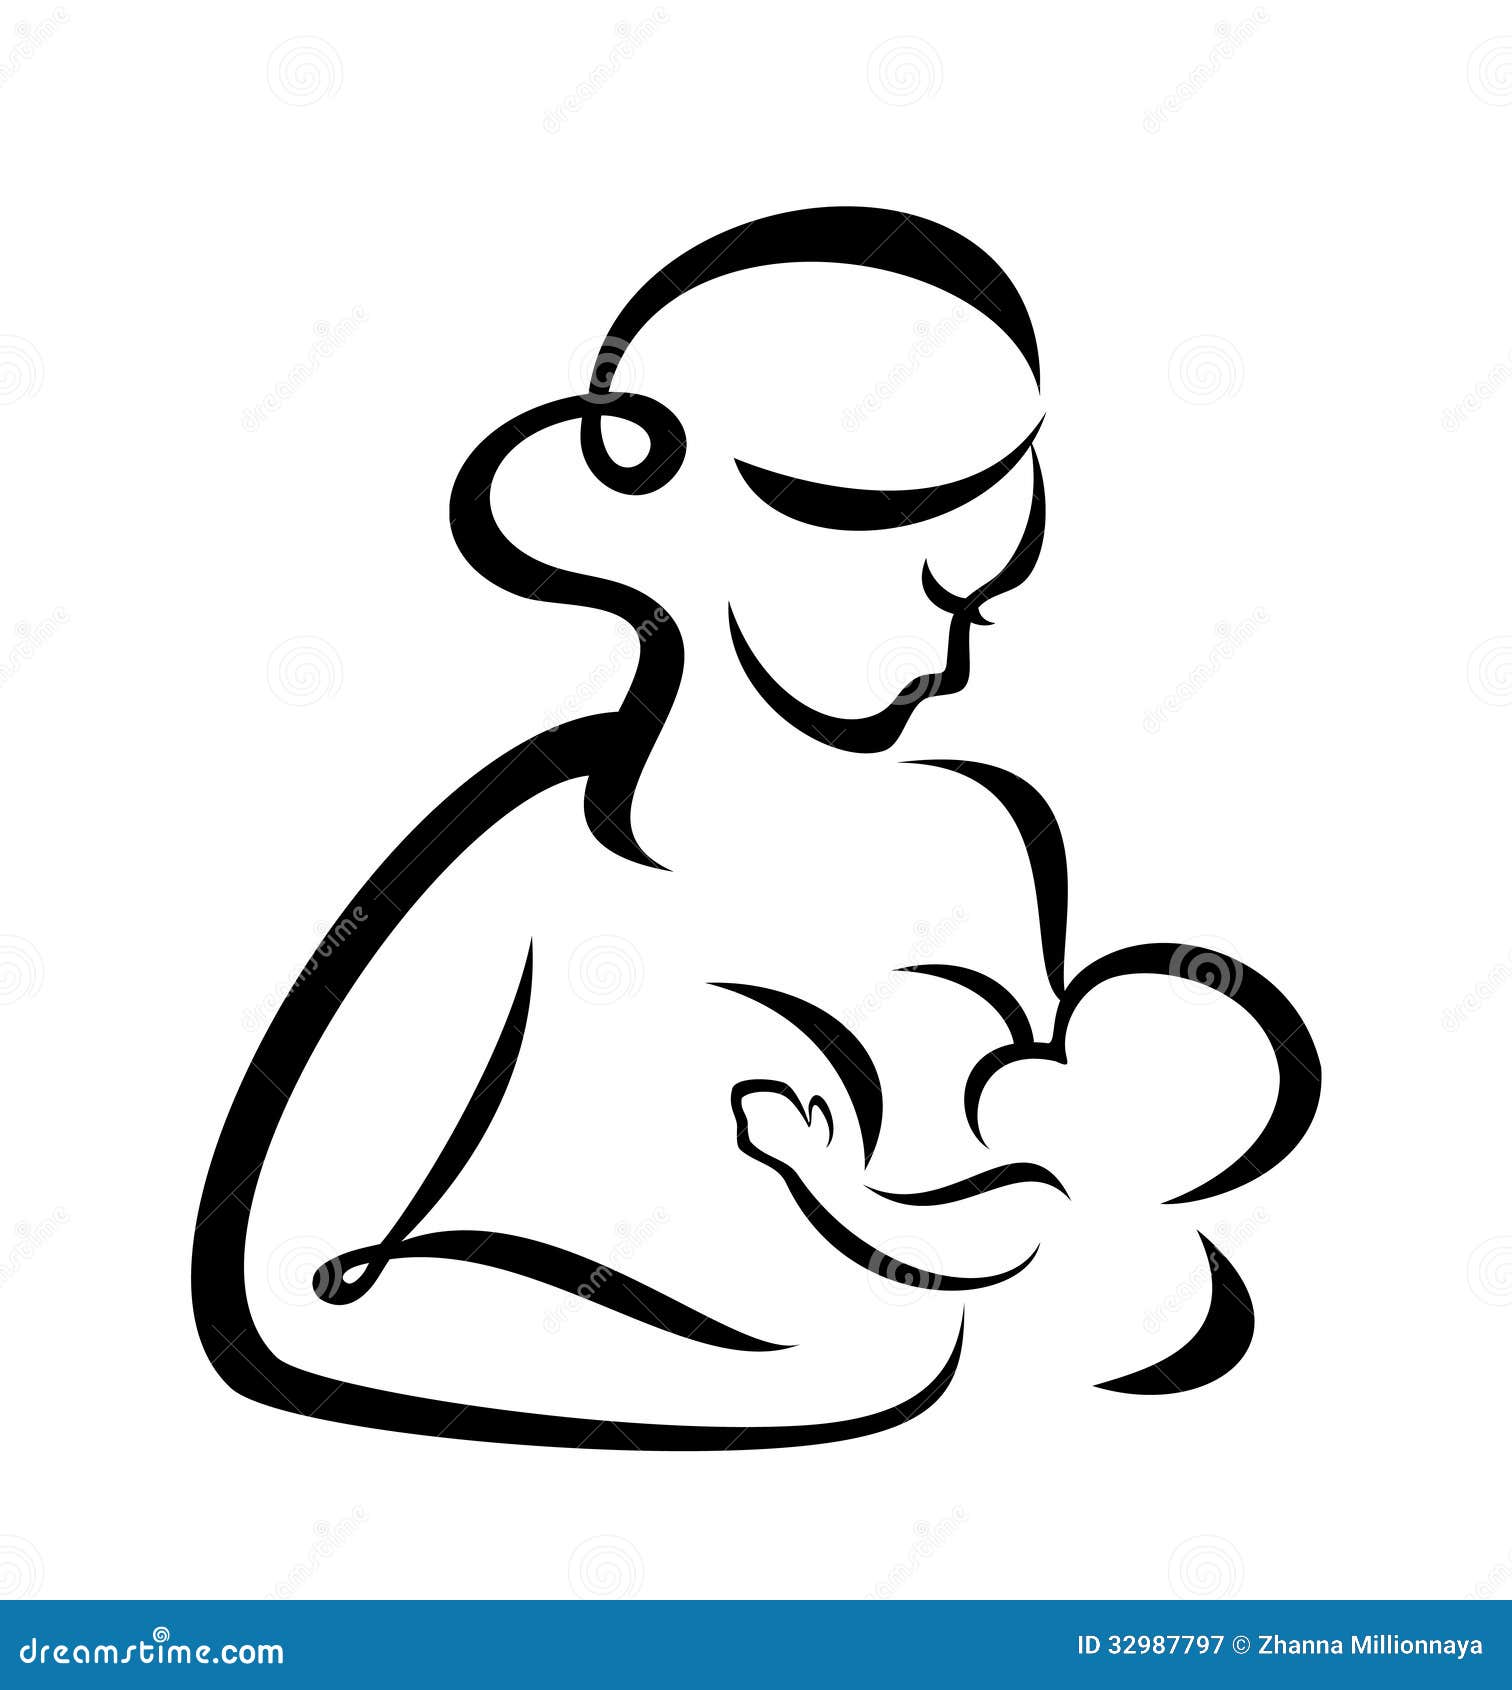 clip art of breastfeeding mother - photo #27